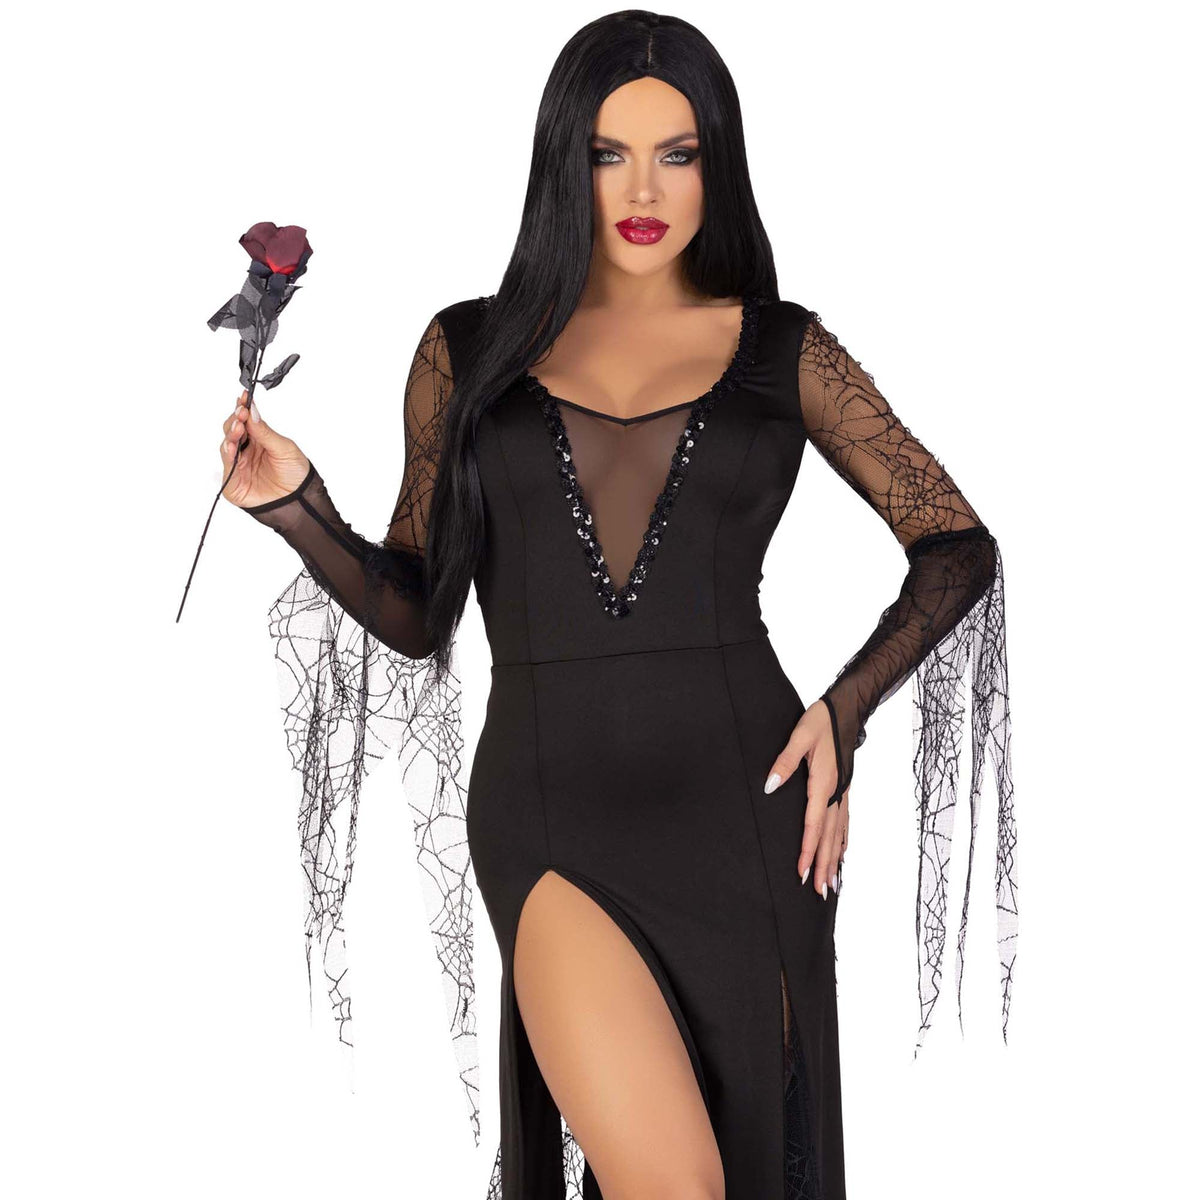 LEG AVENUE/SKU DISTRIBUTORS INC Costumes Spooky Beauty Costume for Adults